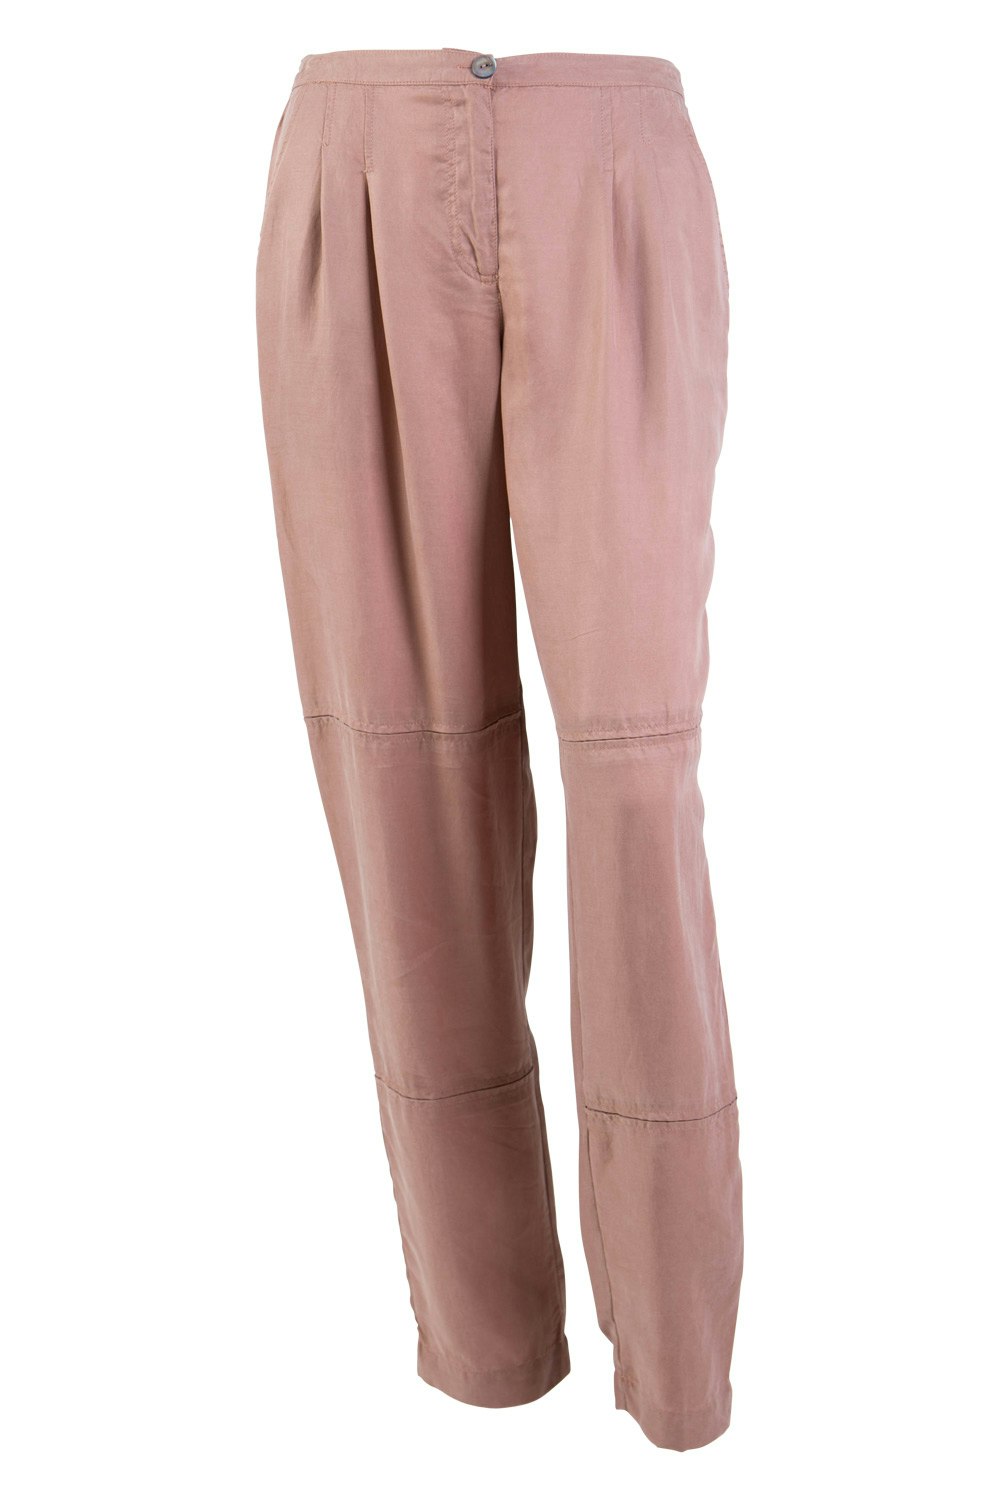 Hammock & Vine Dresses Washed Silk Cupro Pant - Womens Pants ...